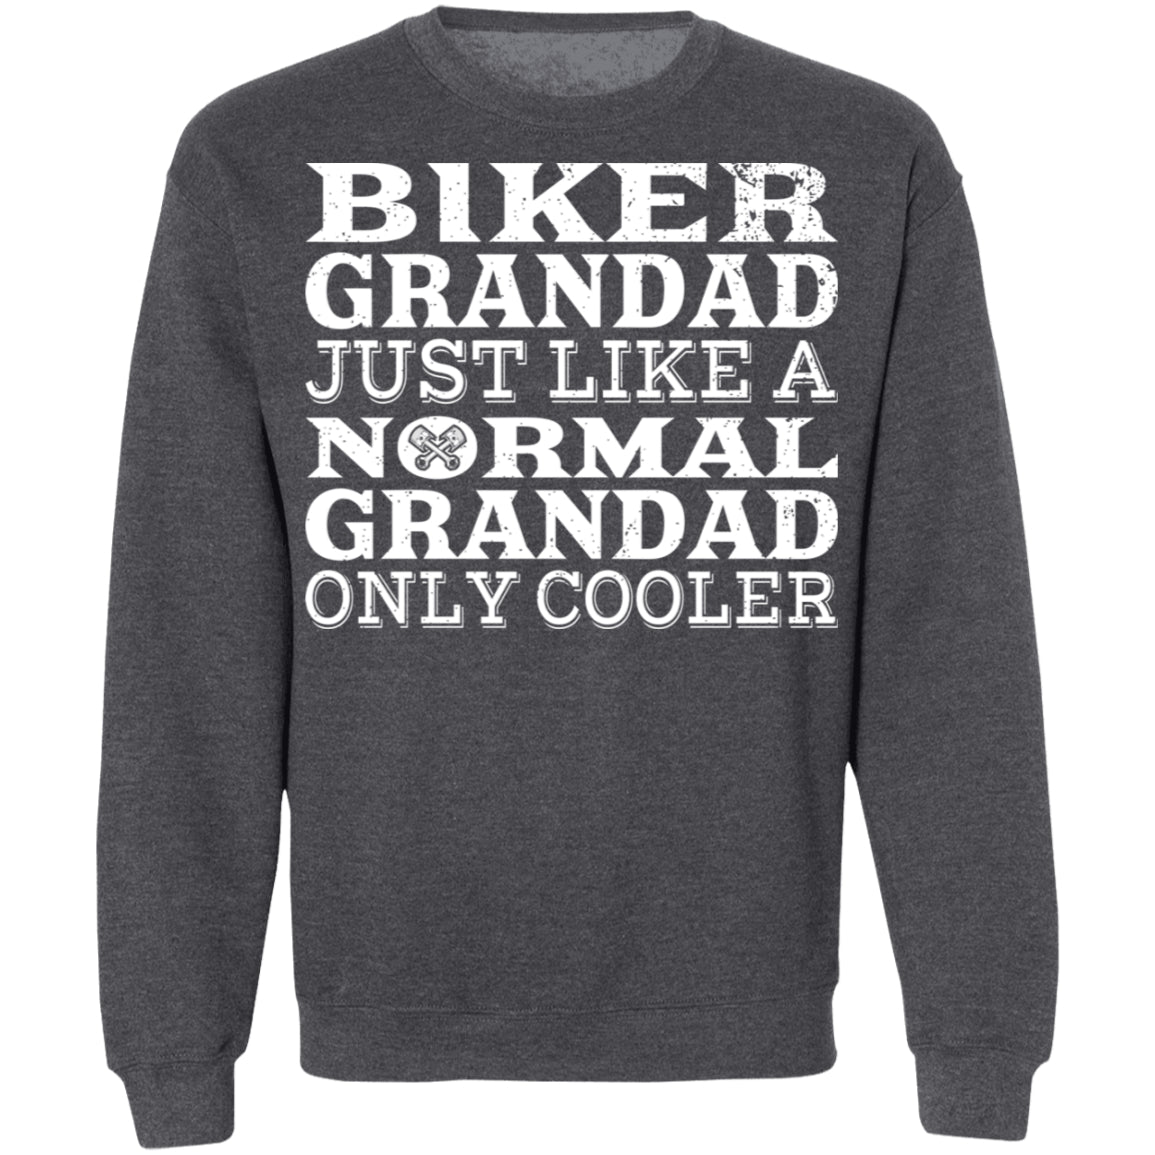 Apparel - Biker Grandad - Just Like A Normal Grandad Only Cooler